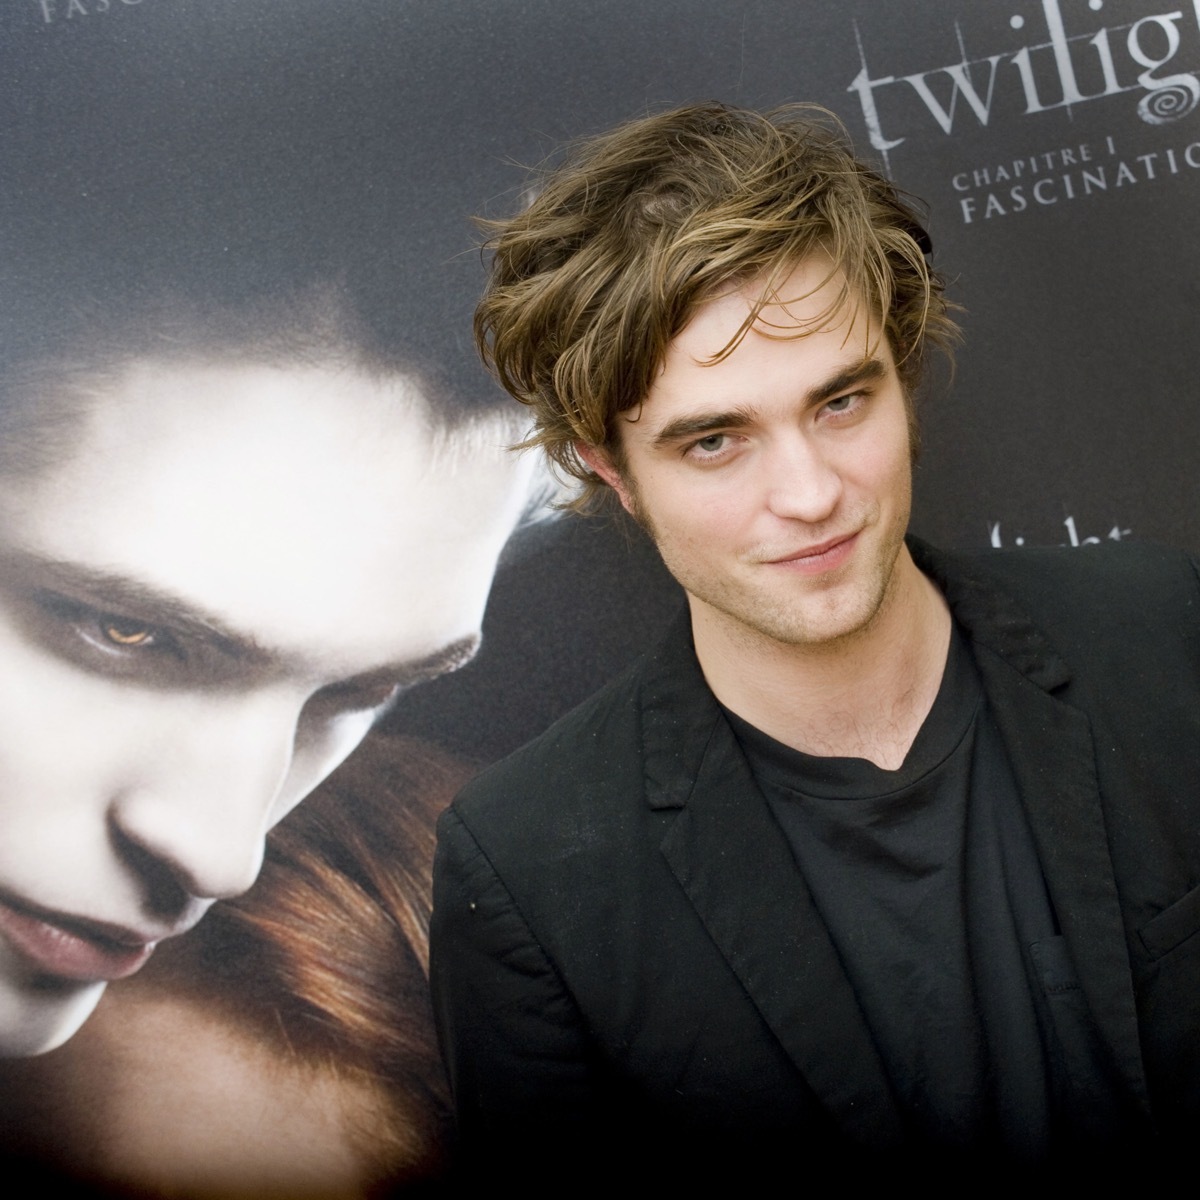 Robert Pattinson at a Twilight photo call in 2008